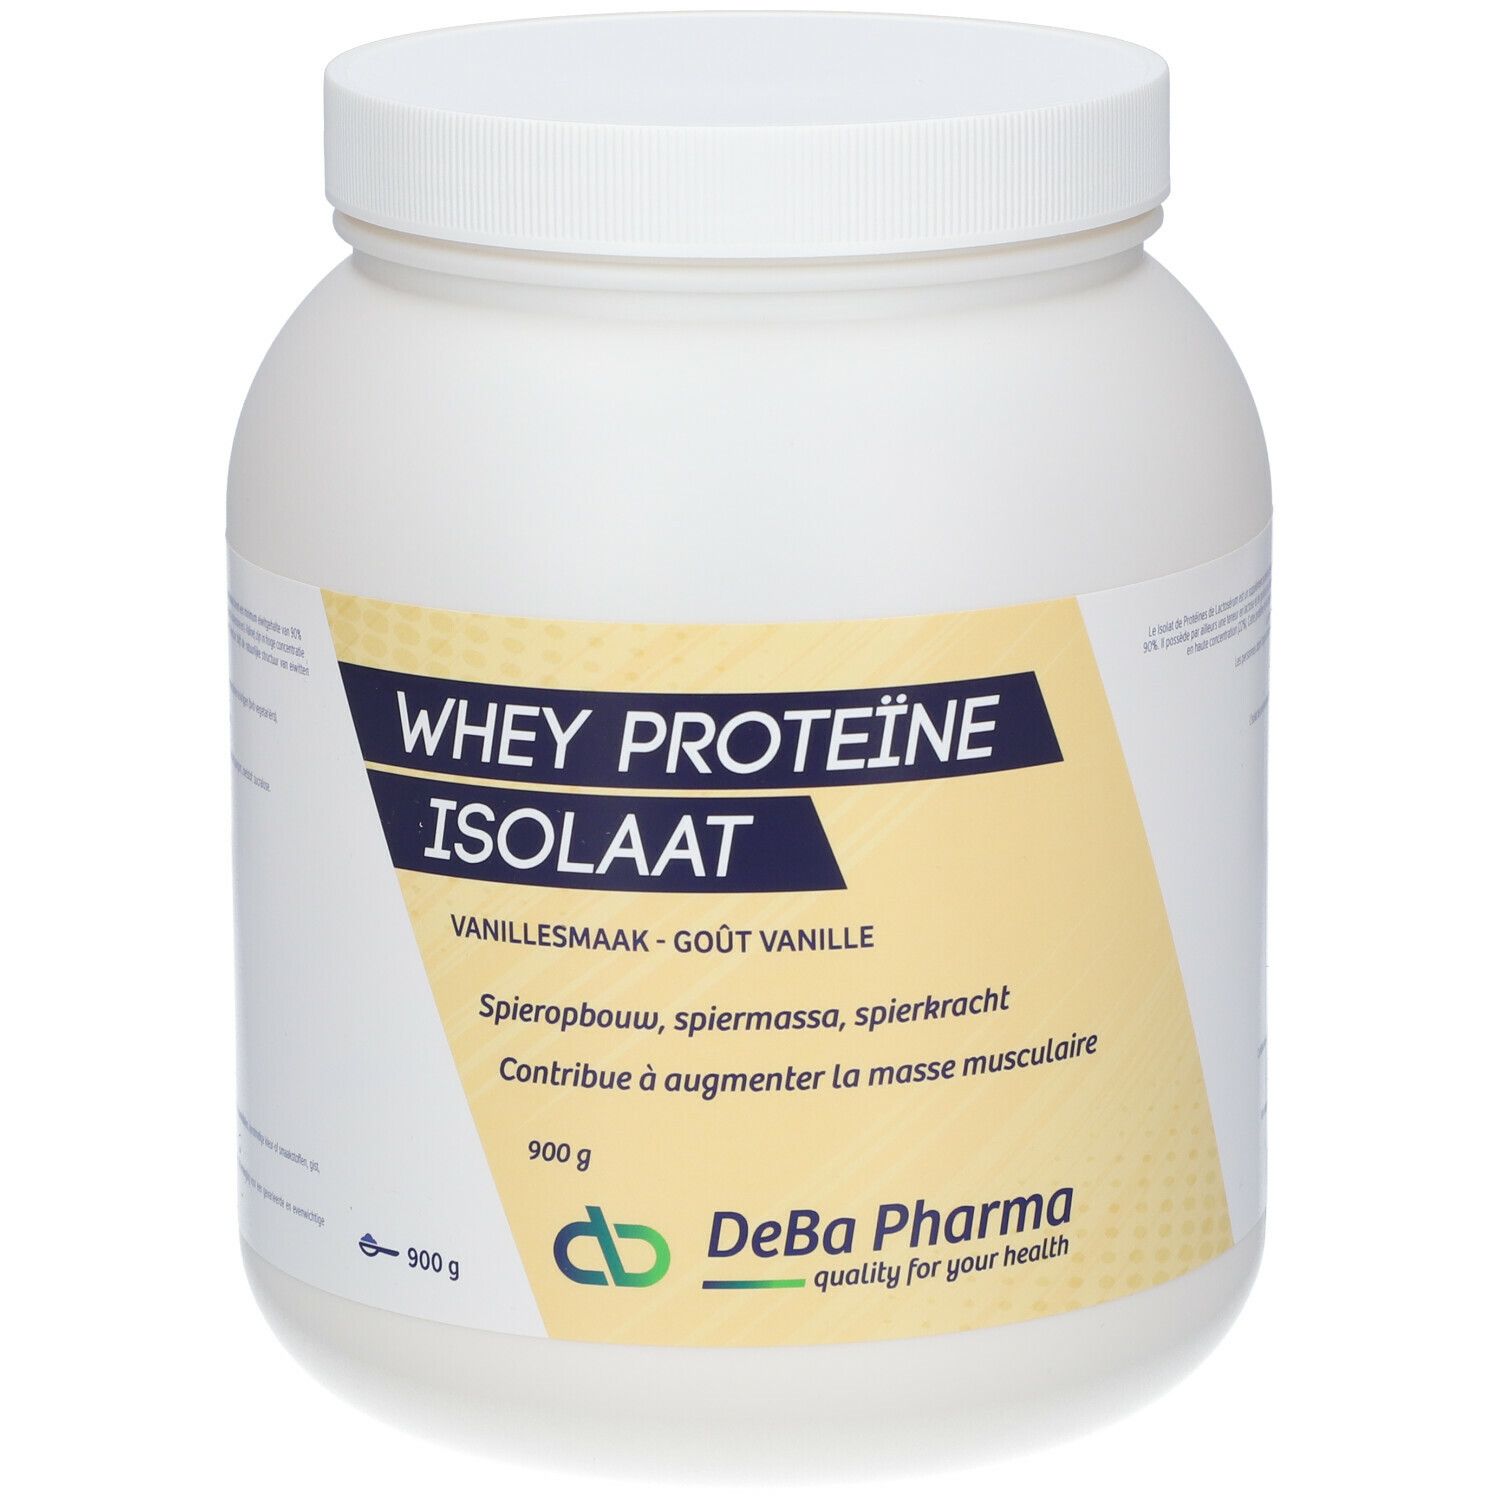 Image of DeBa Pharma Whey Protein Isolaat Vanille